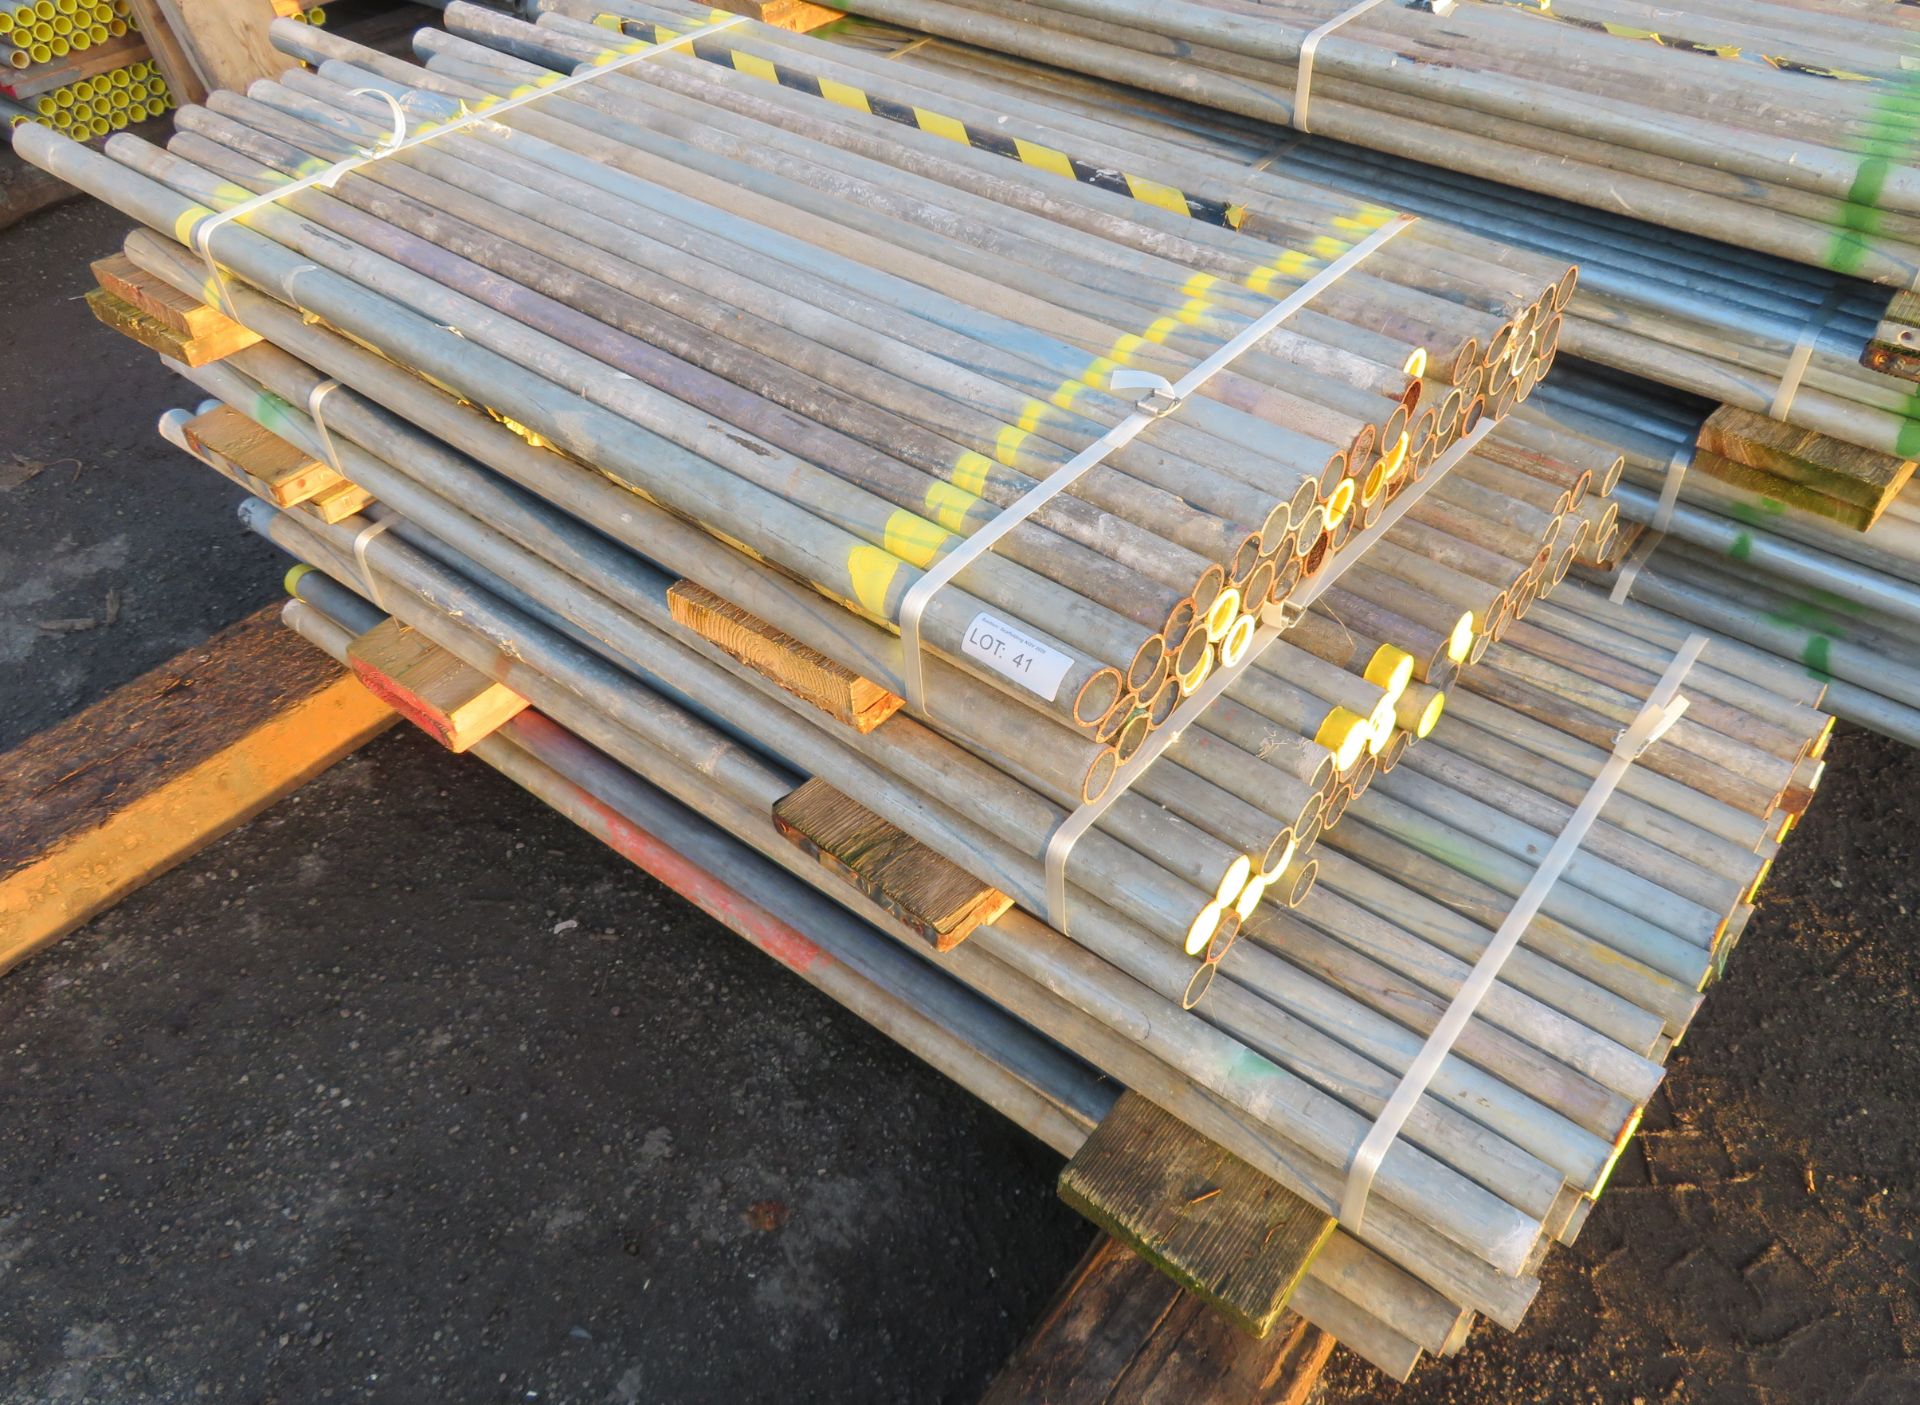 200x Various Length Galvanised Steel Scaffolding Poles. Lengths Range Between 7ft - 4.5ft. - Image 2 of 5